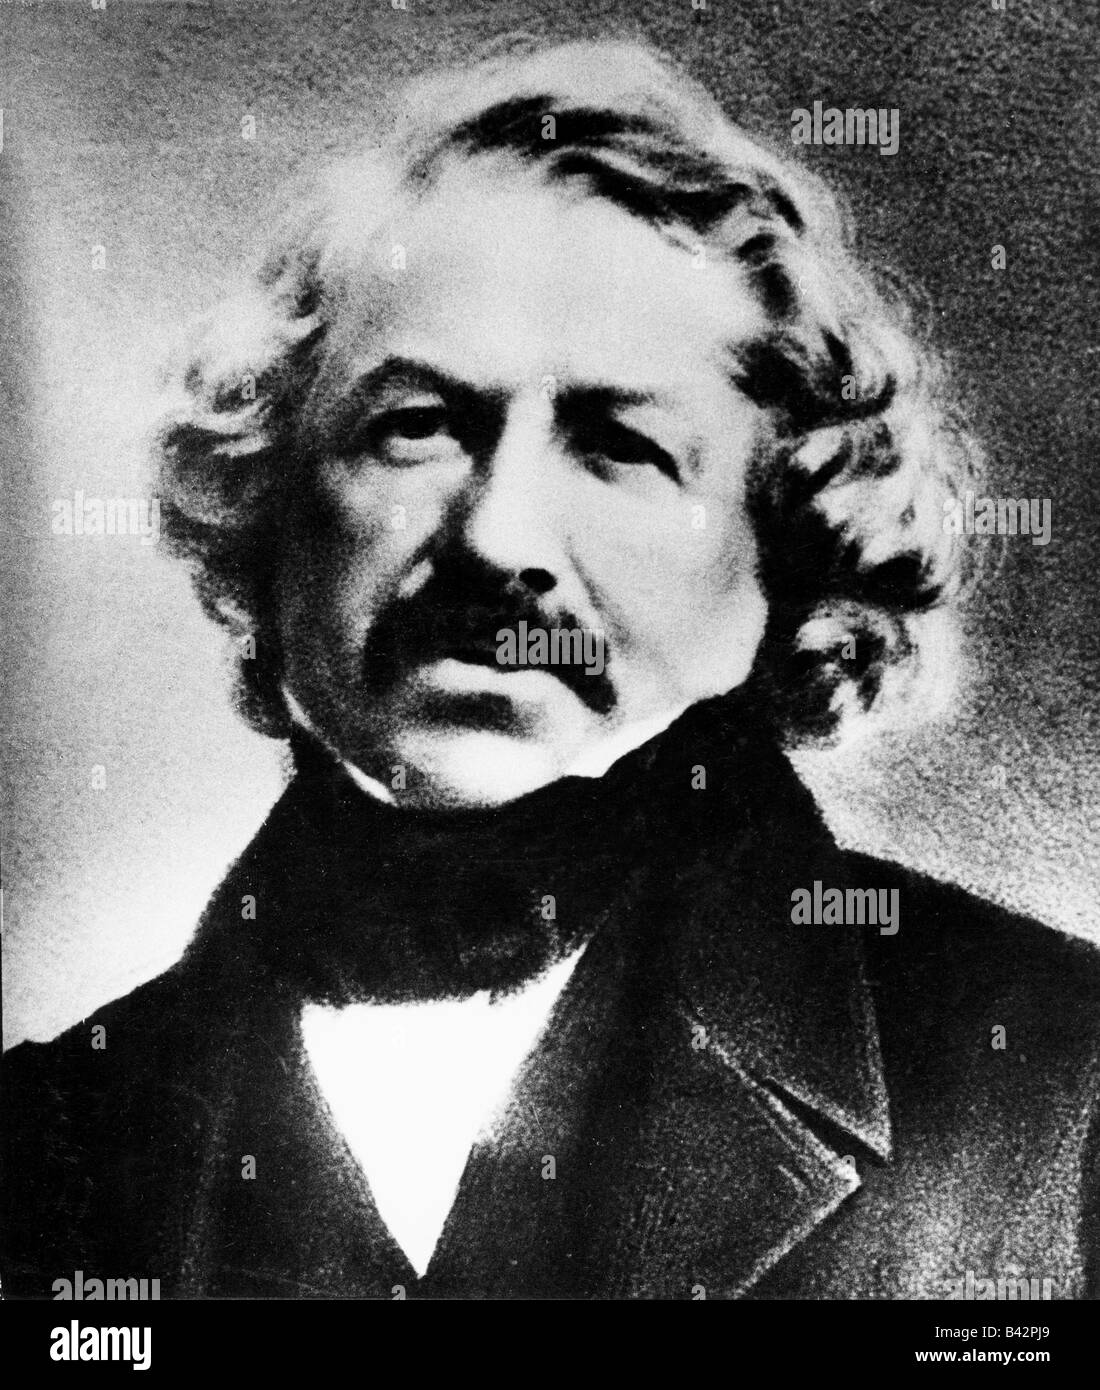 Daguerre, Louis Jacques Mande, 18.11.1789 - 10.7.1851, pittore francese, inventore, ritratto, daguerreotype, circa 1850, Foto Stock